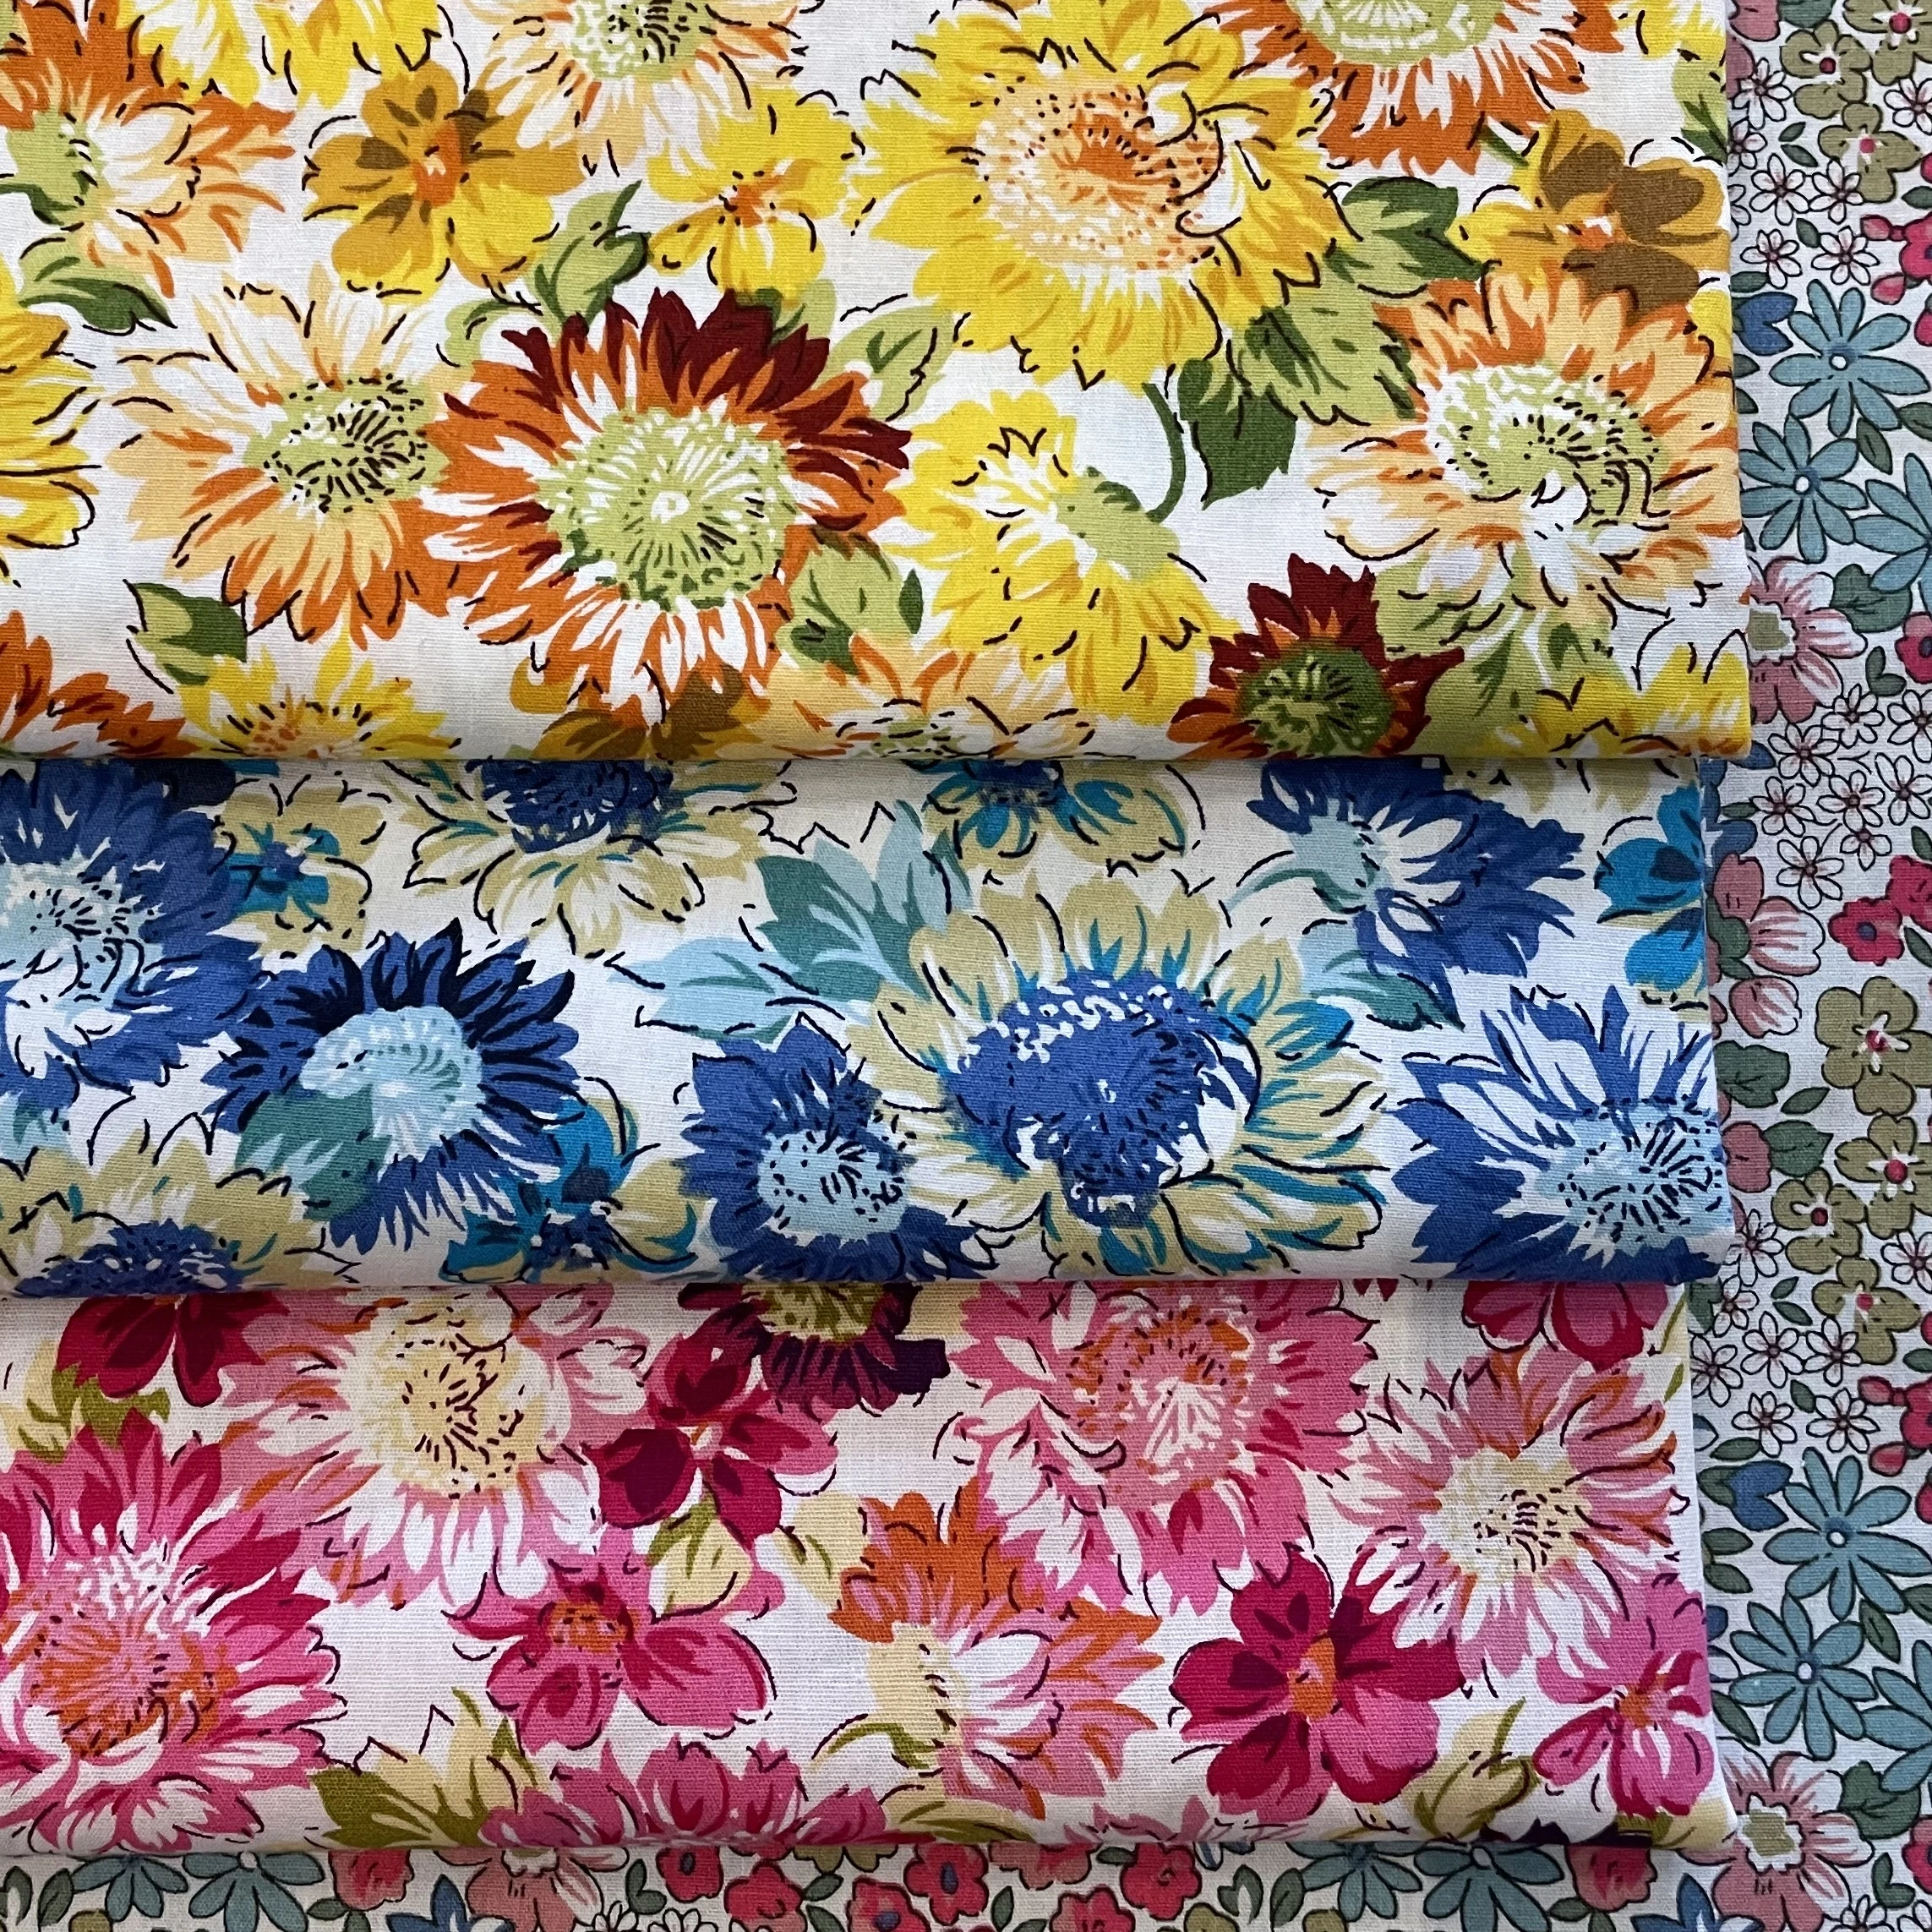 Colored Sunflower 100% Cotton Poplin 40S Like Liberty Fabric Digital Printing for Sewing Cloth Dresses Skirt Kids Designer 2023